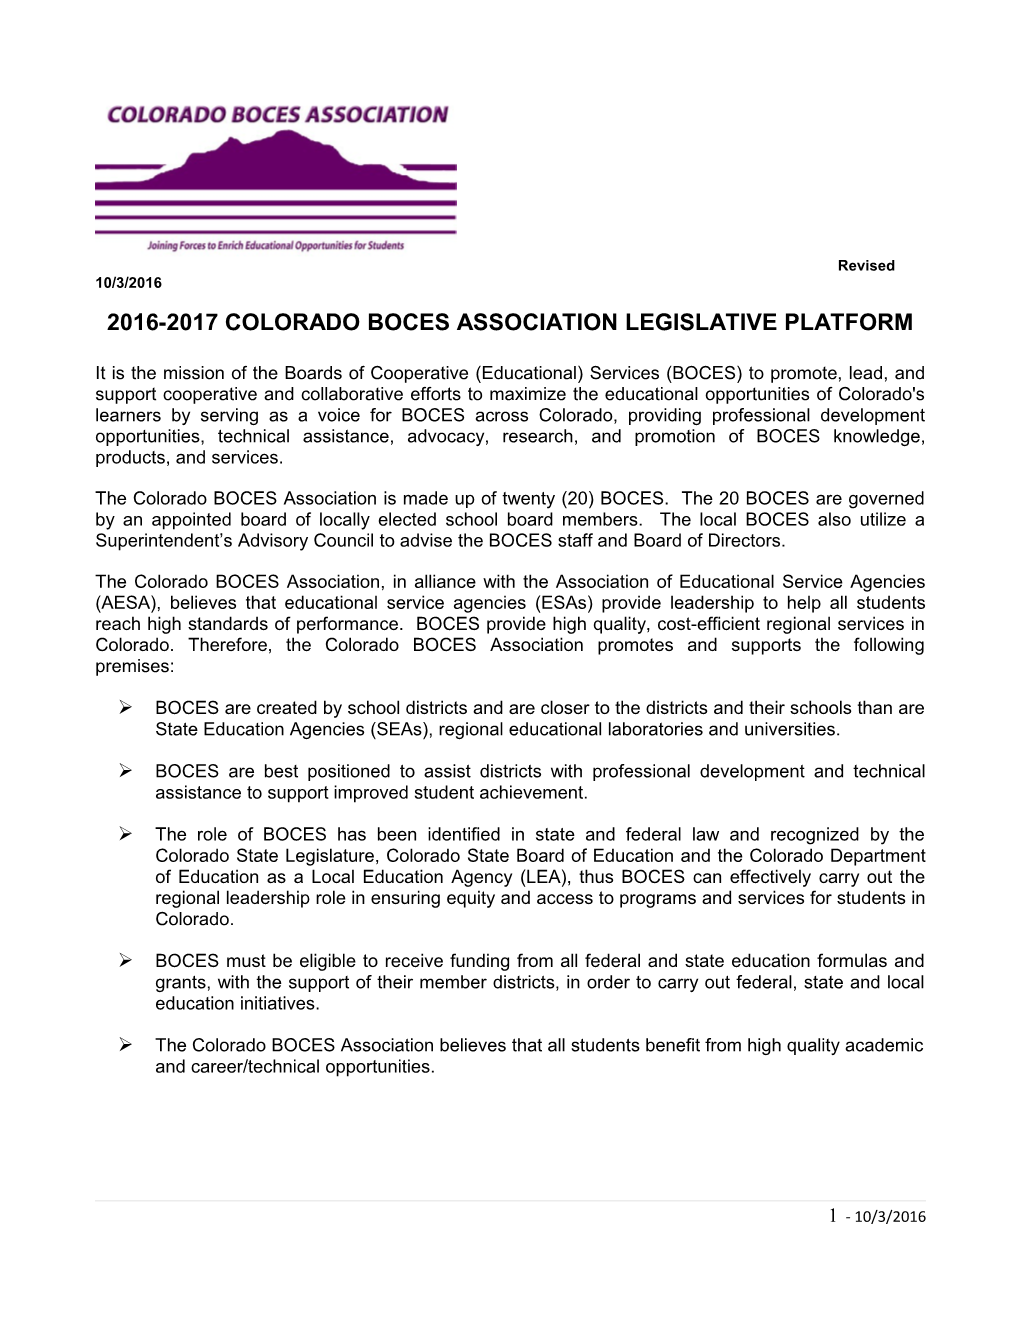 2016-2017Colorado Boces Association Legislative Platform